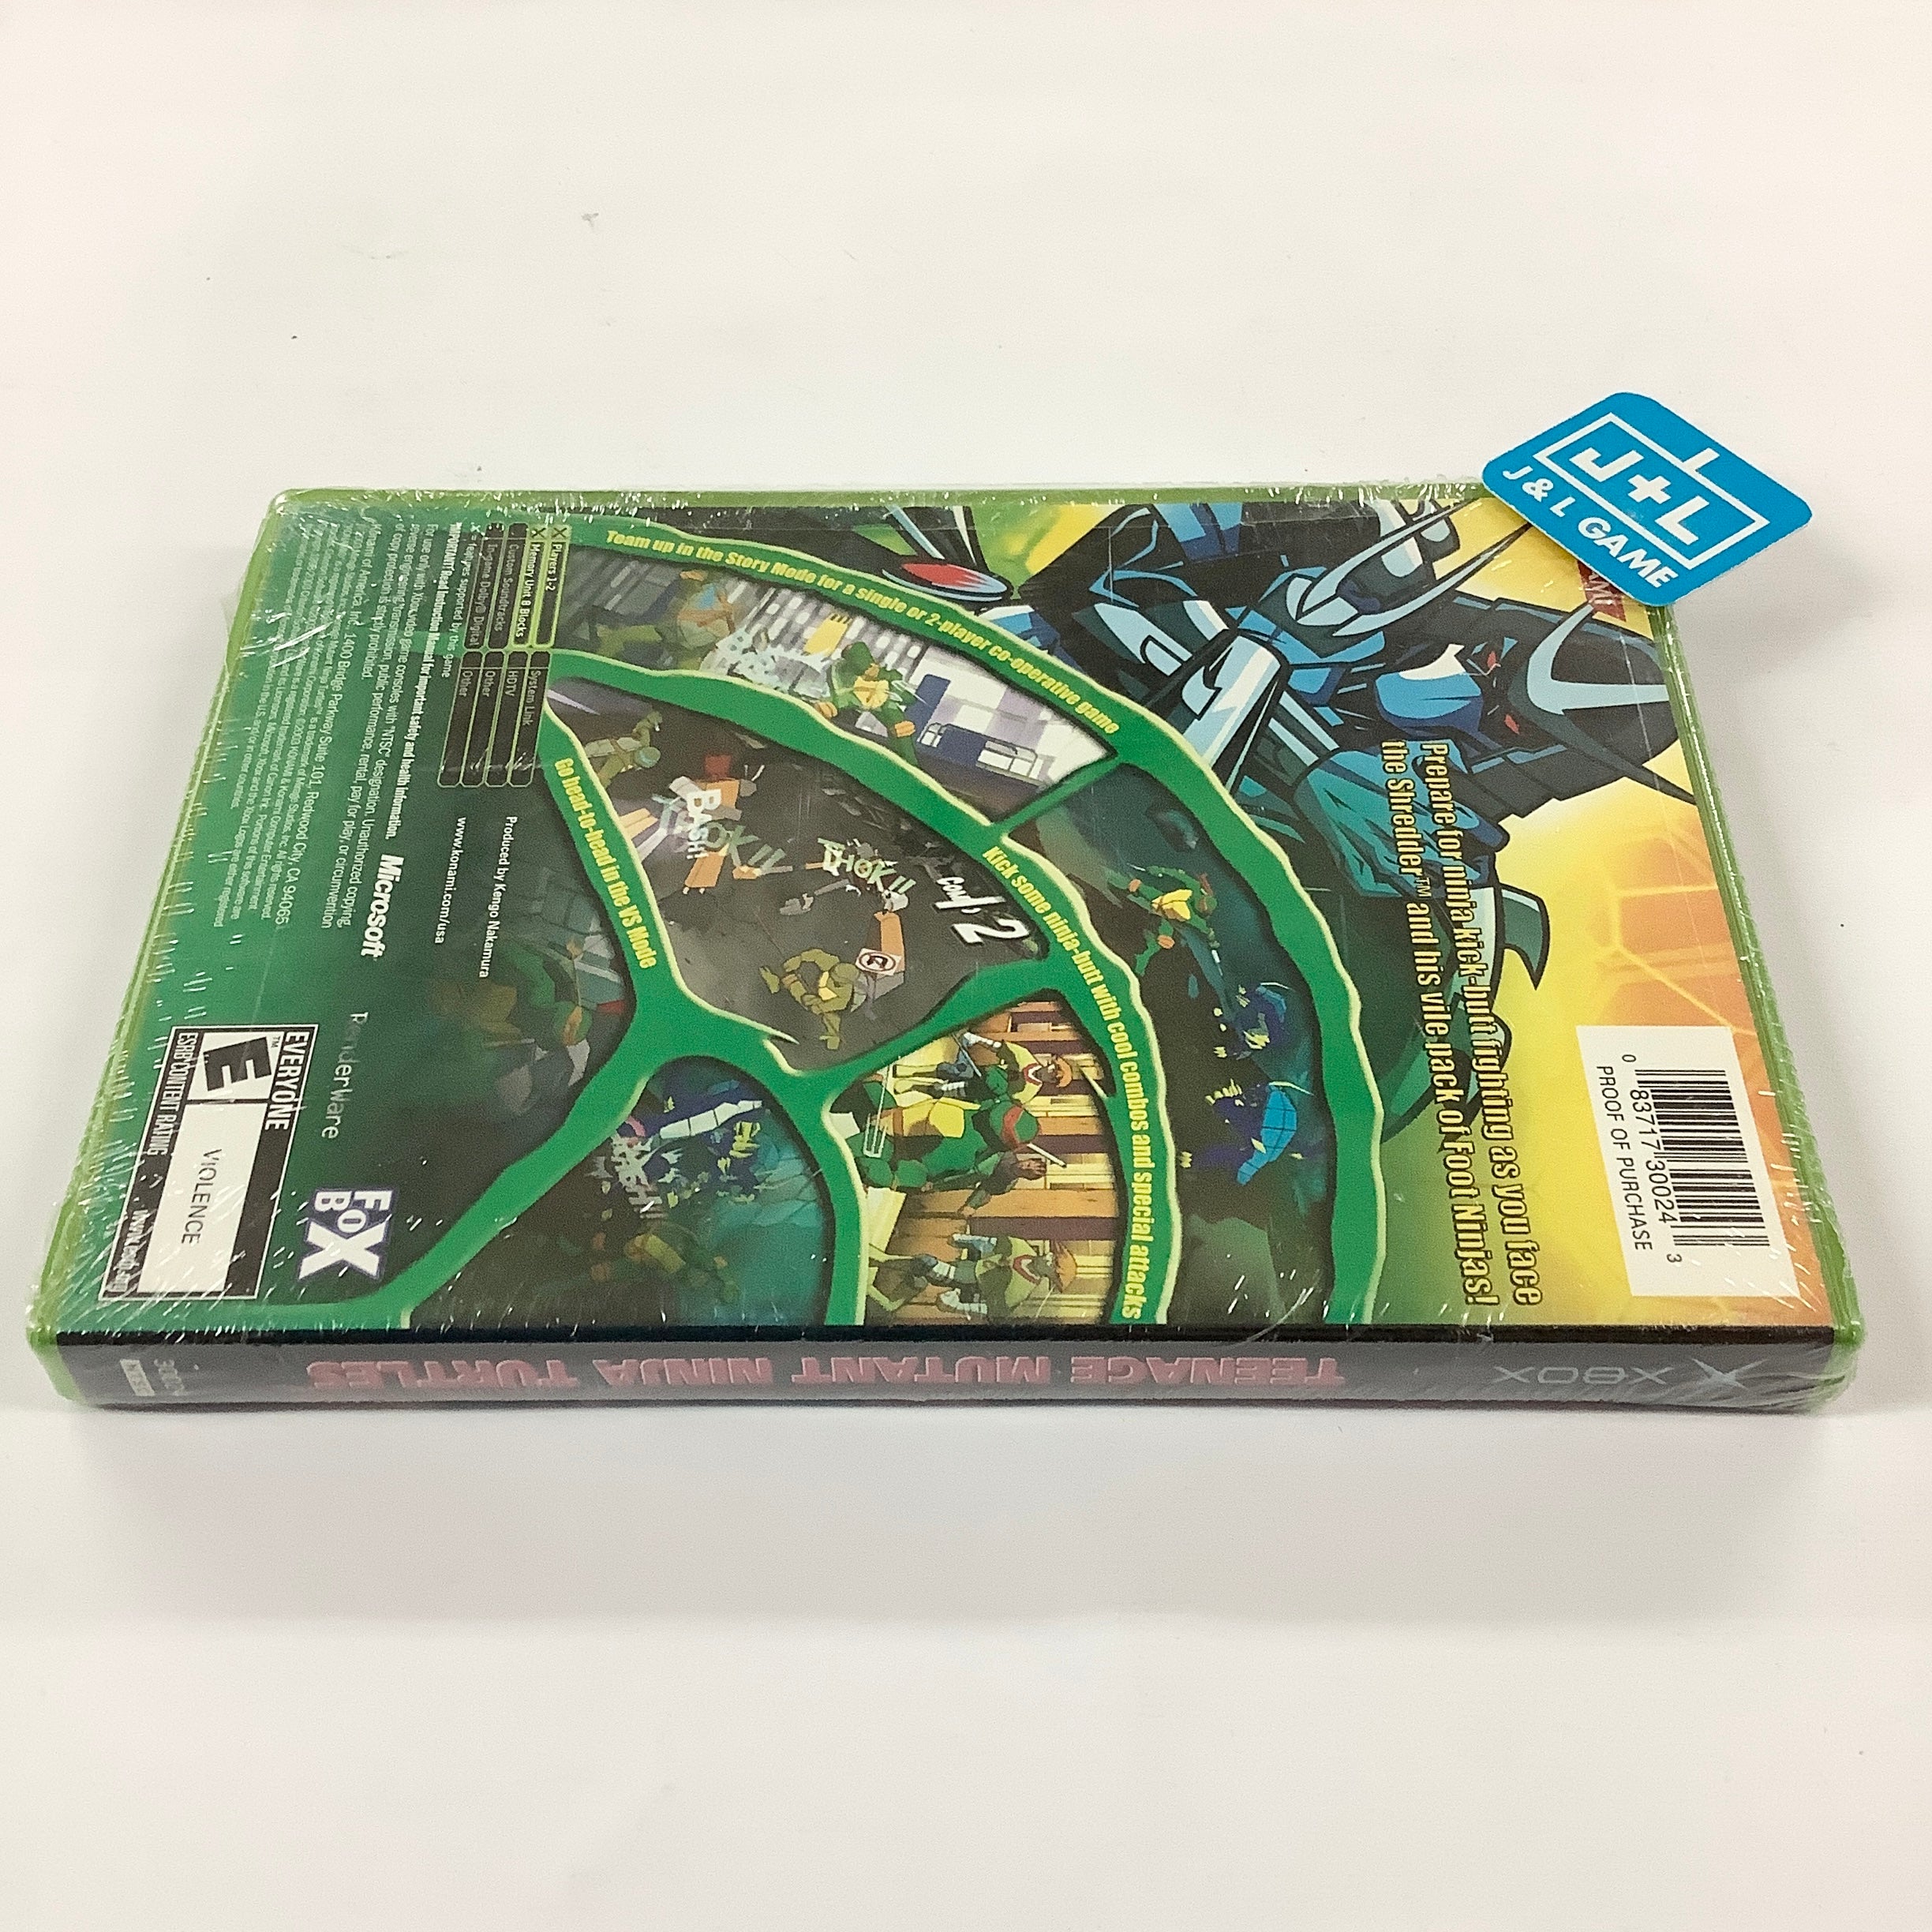 Teenage Mutant Ninja Turtles - (XB) Xbox Video Games Konami   